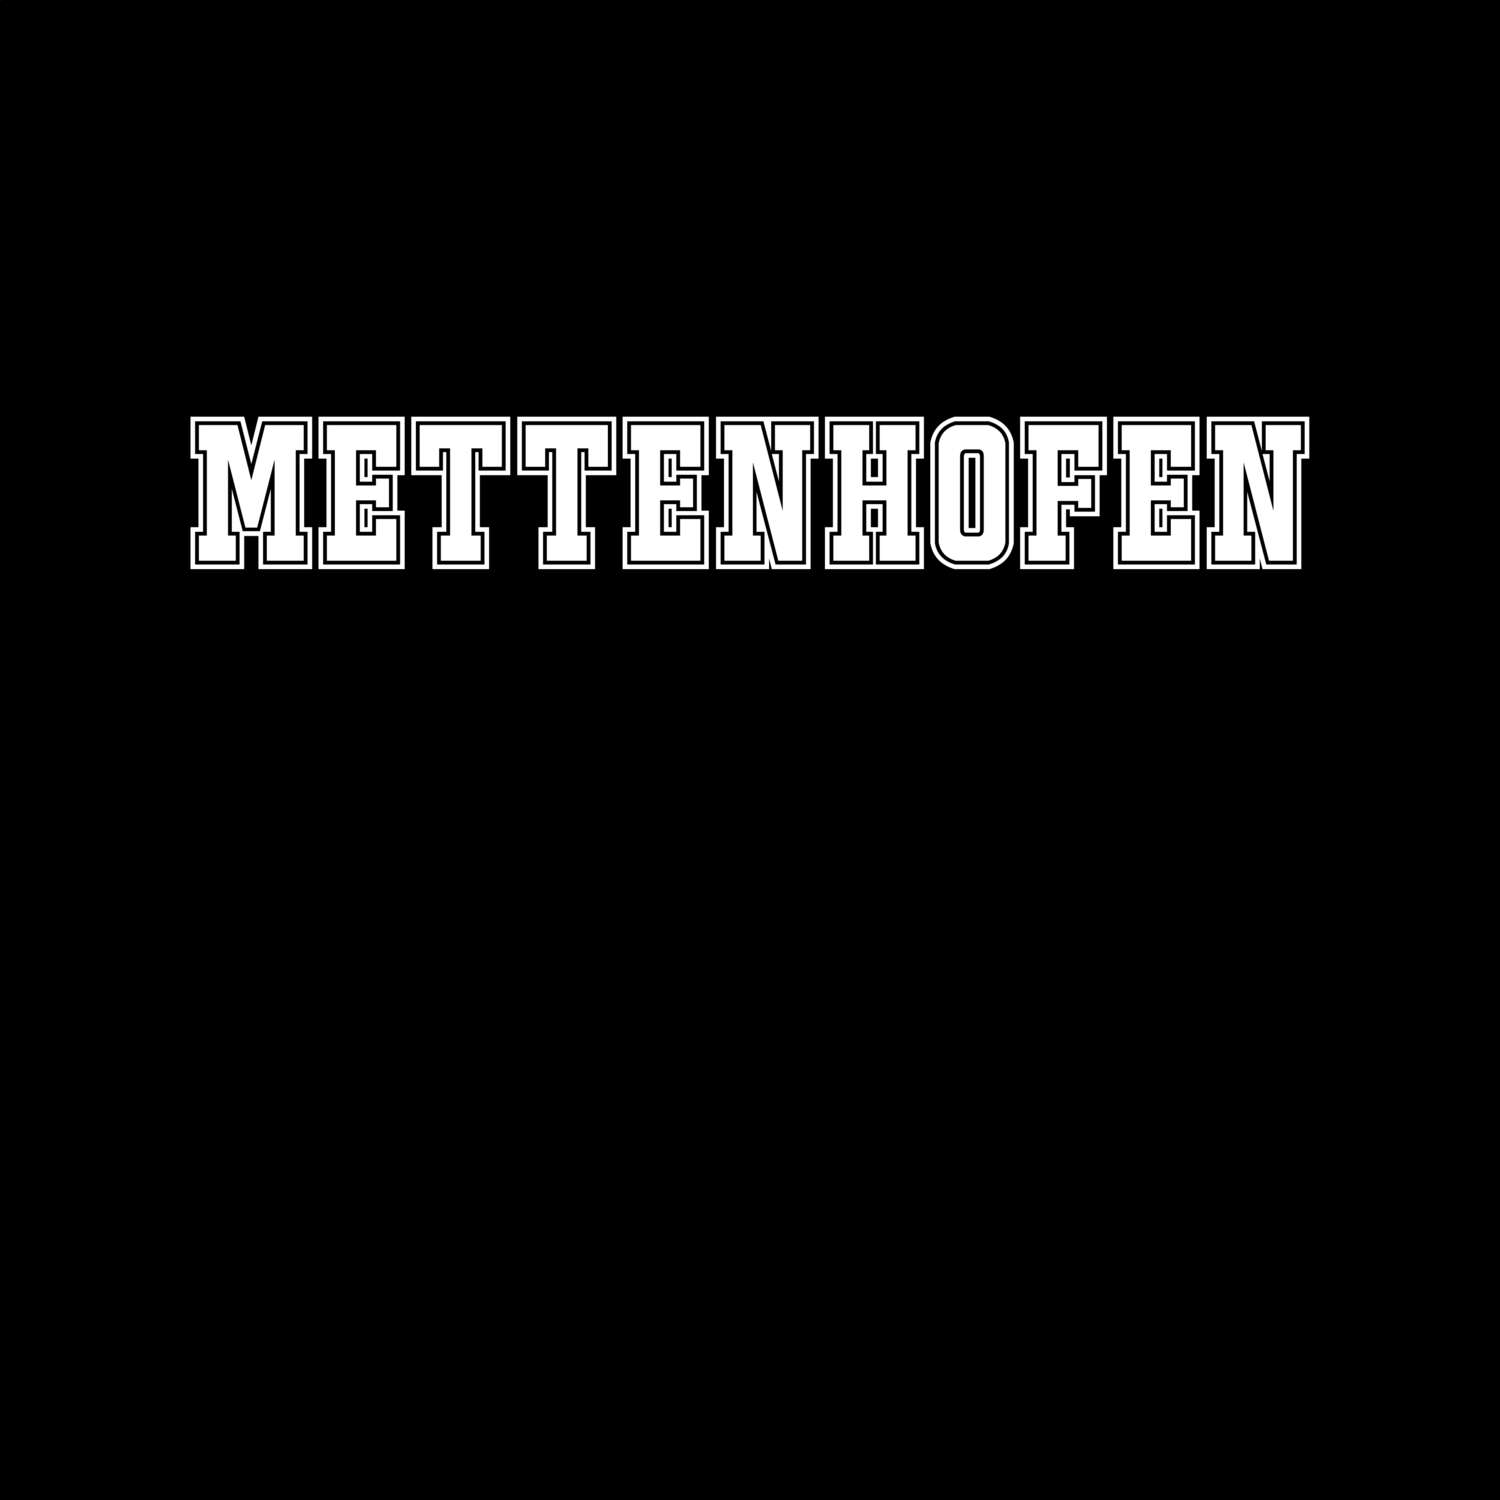 Mettenhofen T-Shirt »Classic«